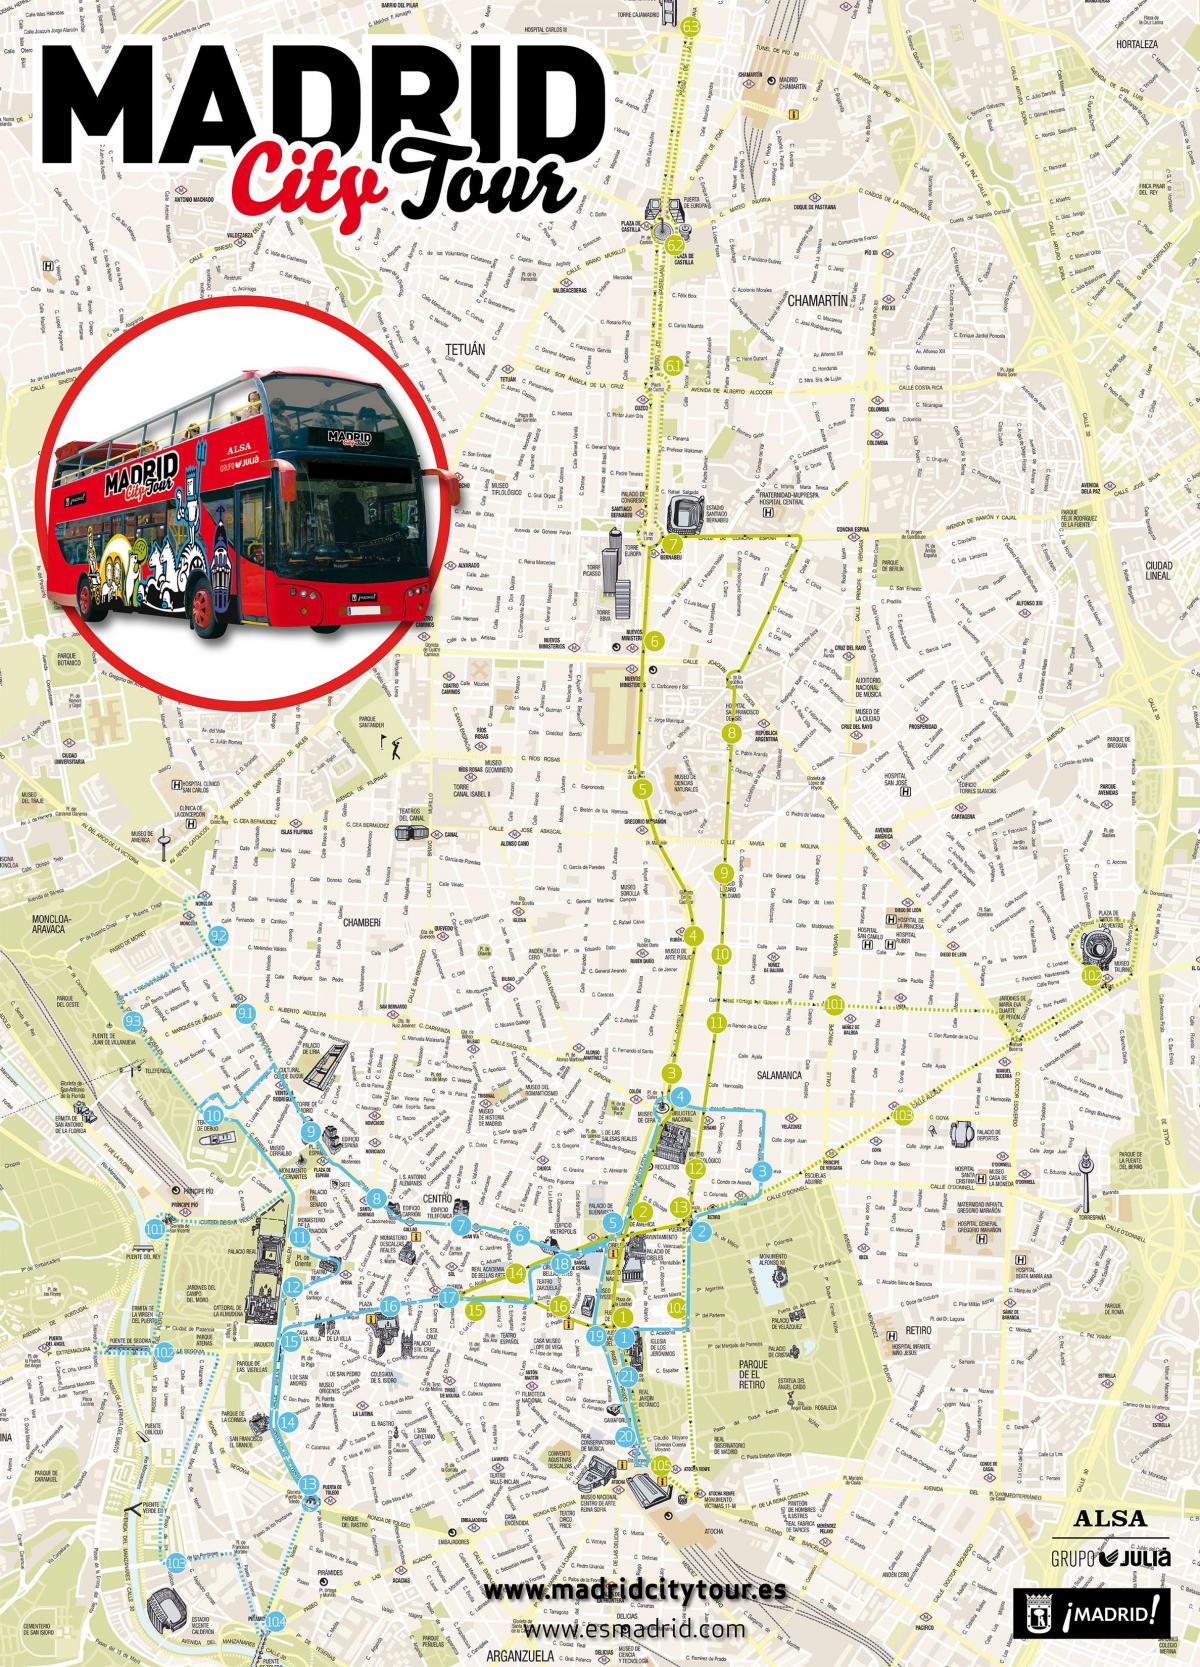 Madrid gezi otobüsü göster